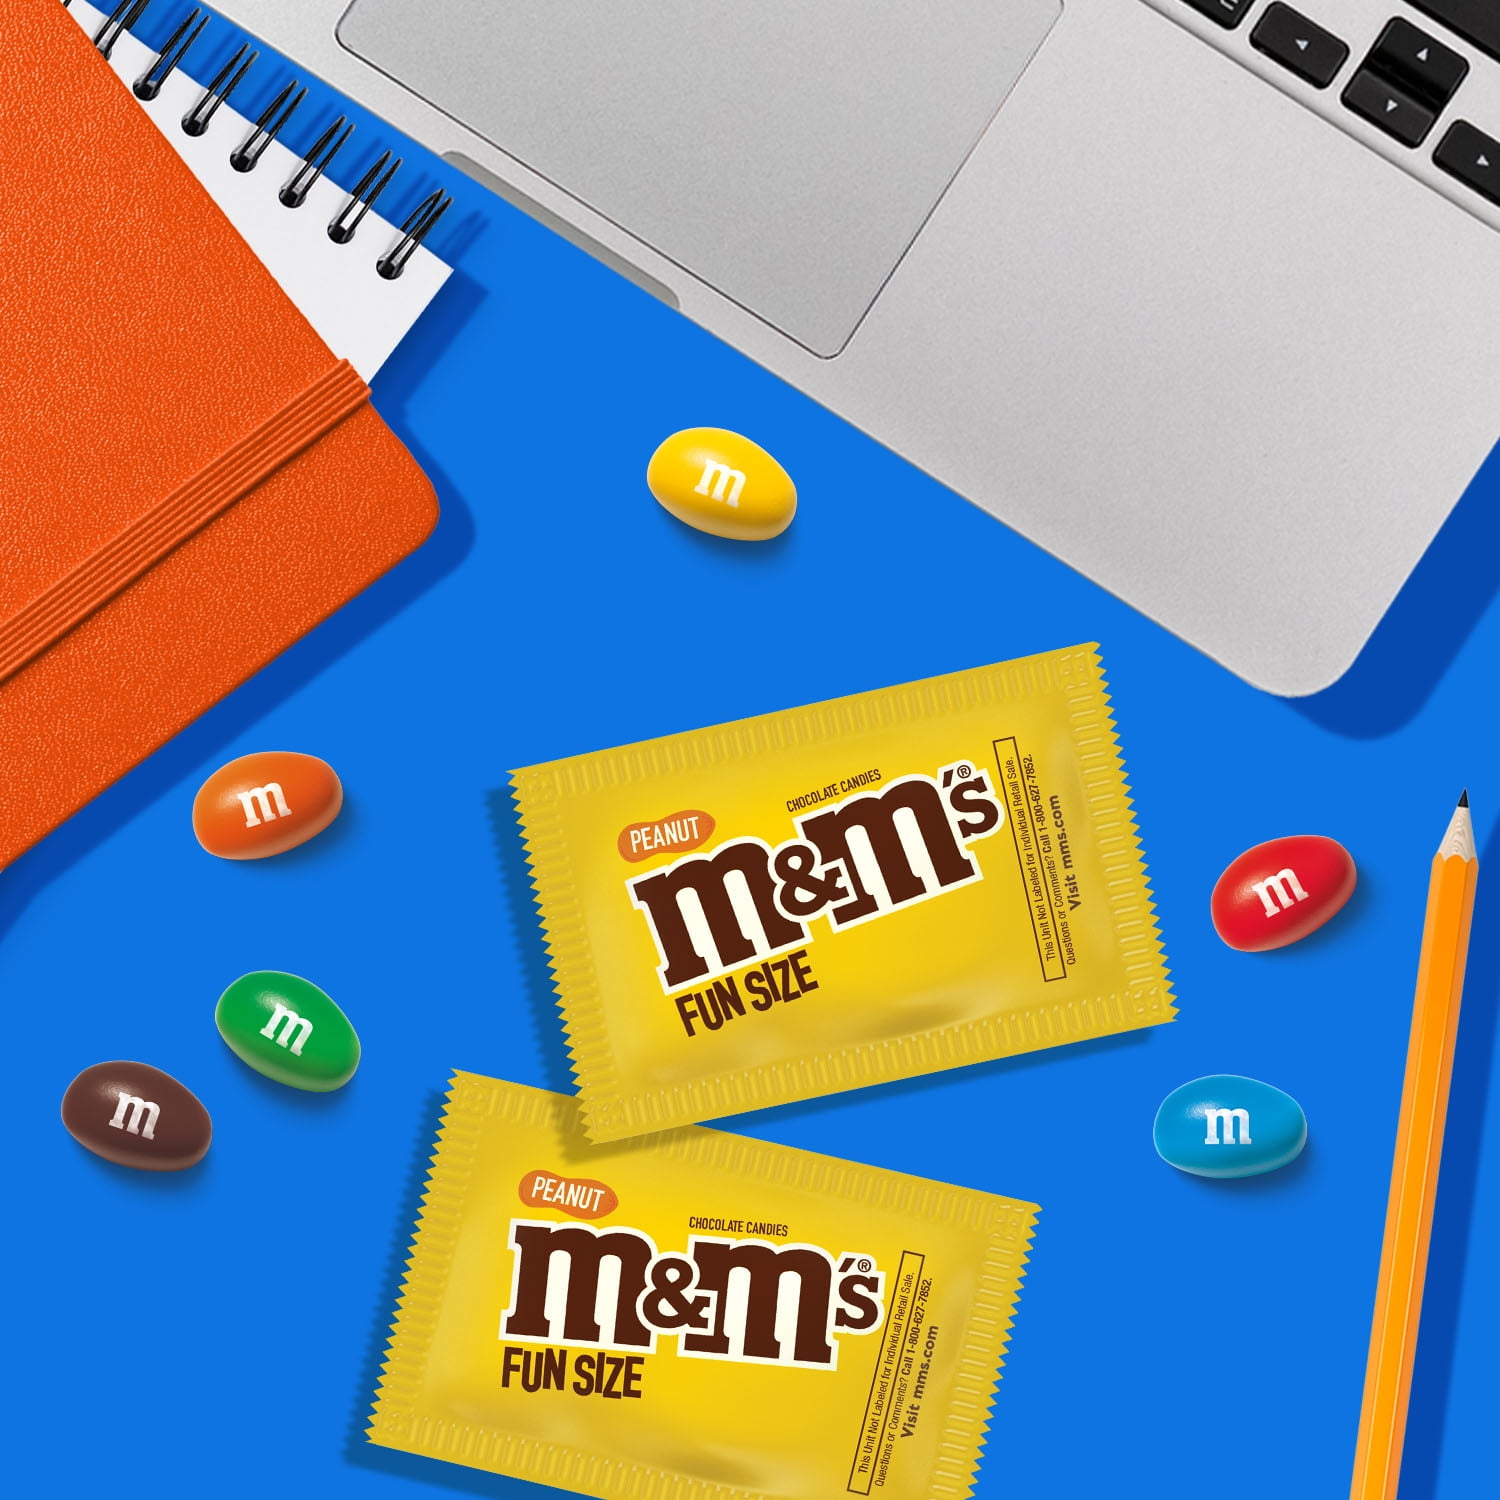 M&M'S Peanut Milk Chocolate Fun Size Candy Bag, 10.57 oz - Mariano's